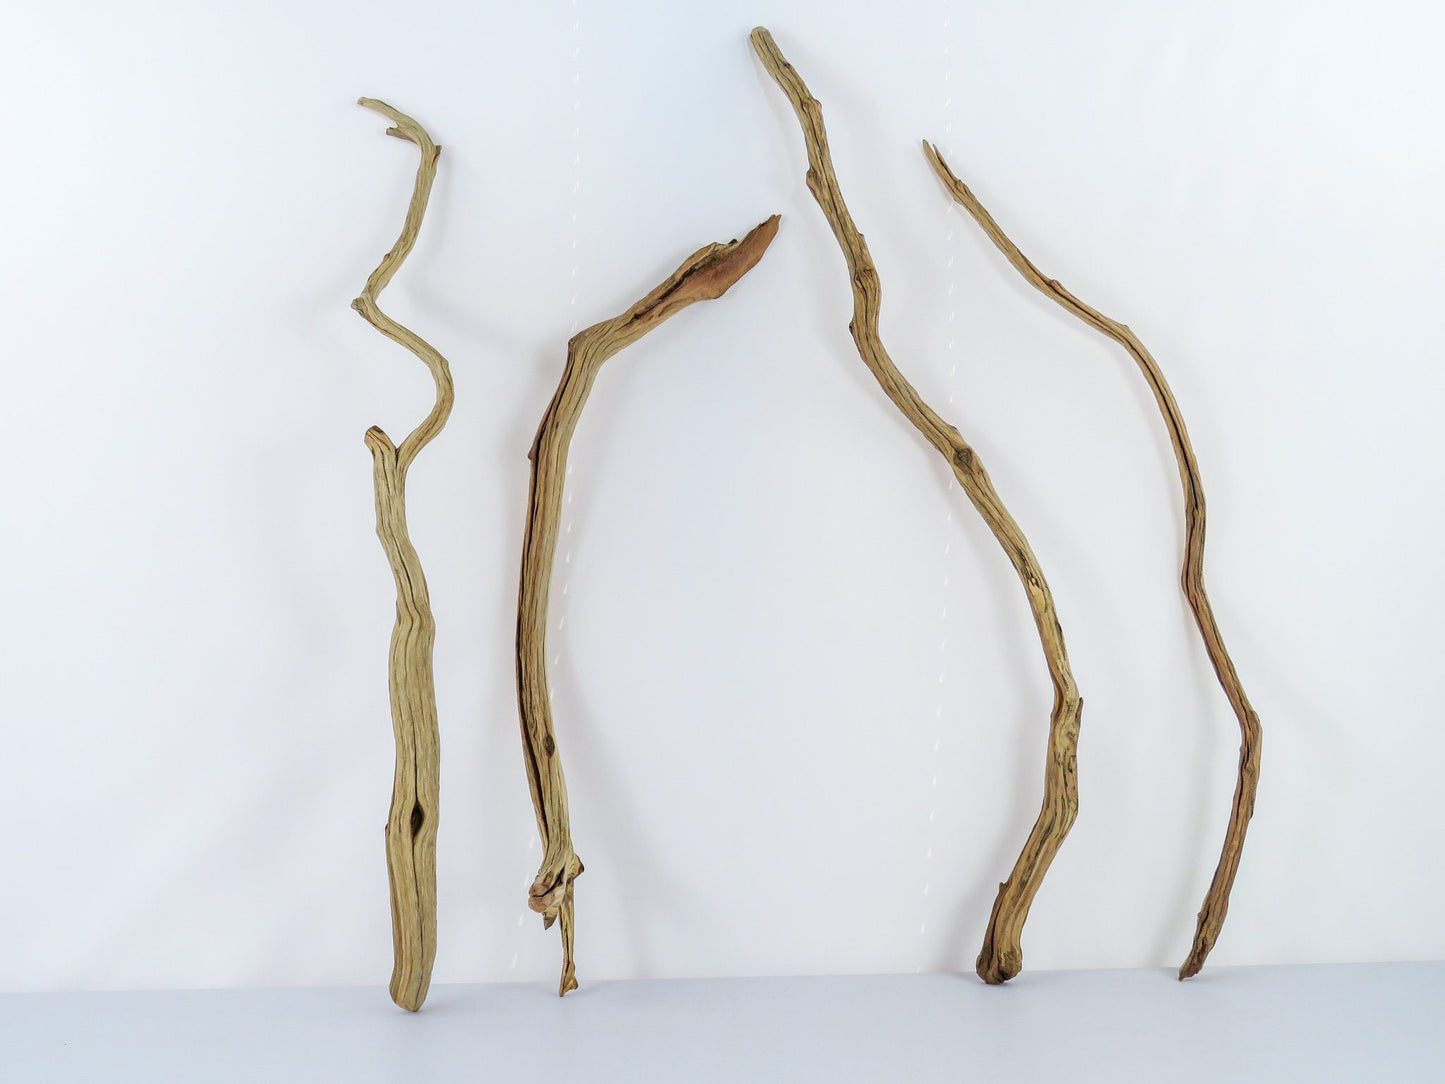 Manzanita Driftwood Sticks, (4 pc set), Reptile Terrarium, Driftwood Decor, Vivarium, Aquarium Wood, High-Quality Arizona Manzanita Branches